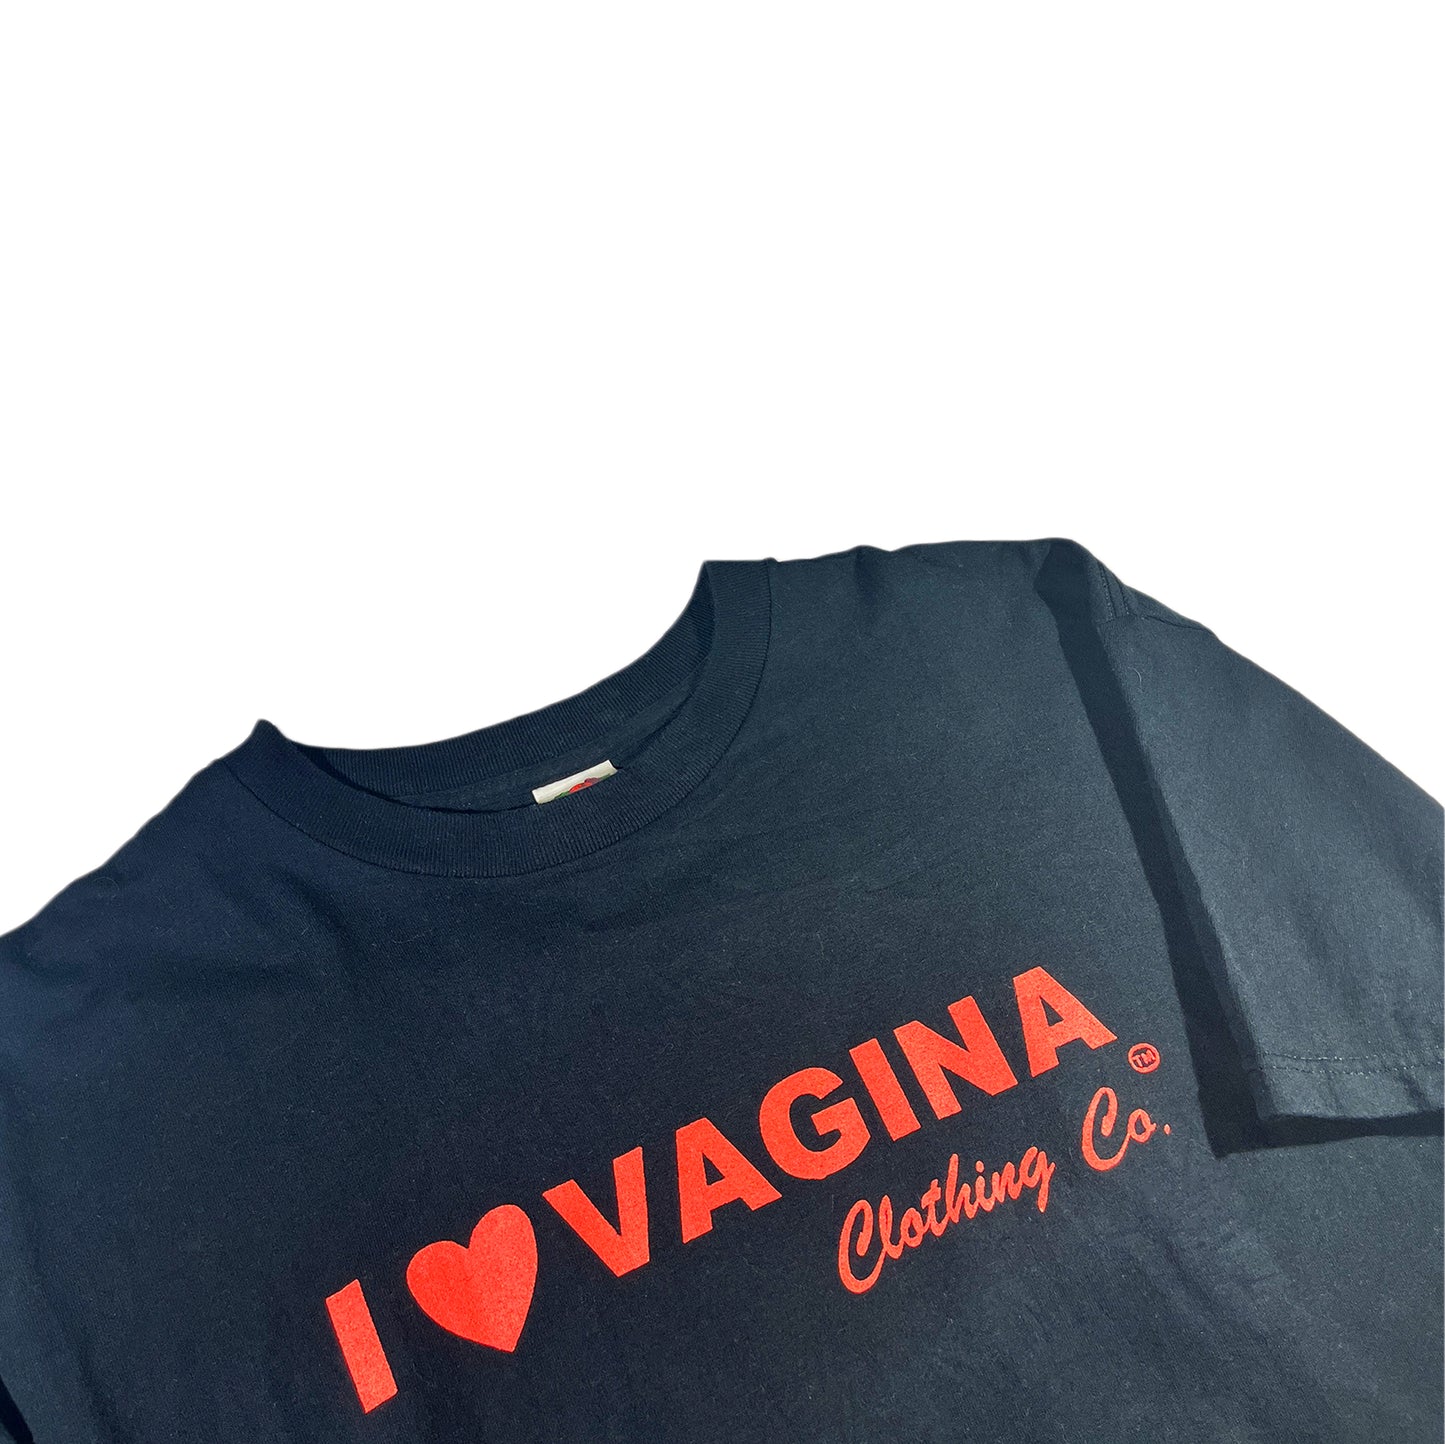 Vintage I Heart Vagina T-Shirt Funny Slogan